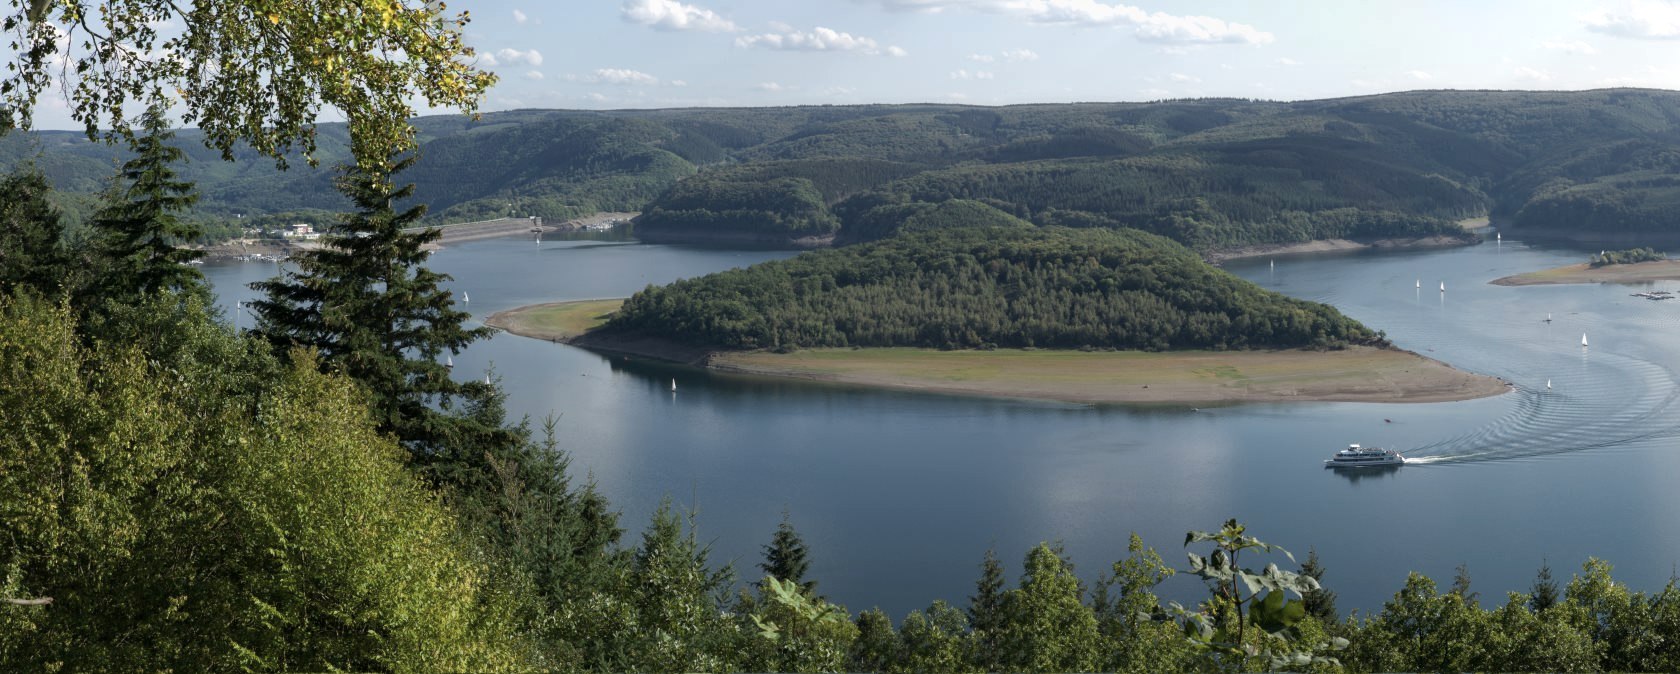 Rursee-Panorama, © Eifel Tourismus GmbH, P. Jacob